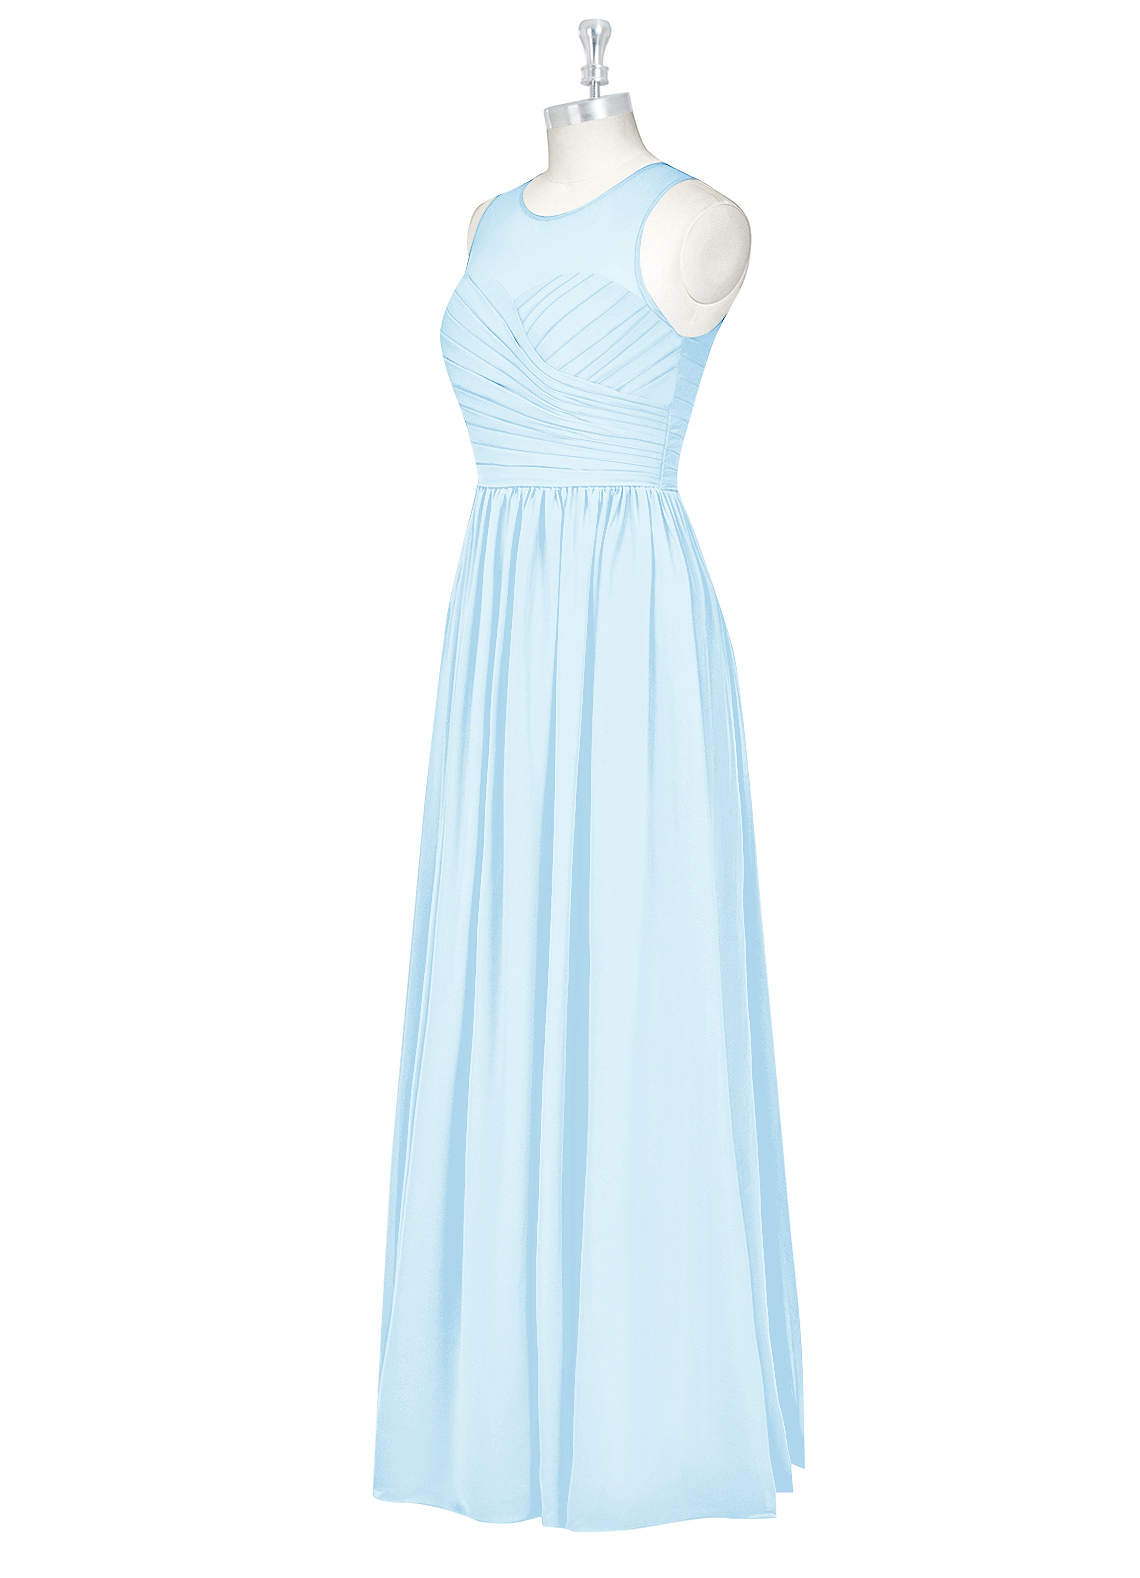 Azazie Nina Bridesmaid Dresses A-Line Pleated Chiffon Floor-Length Dress image1